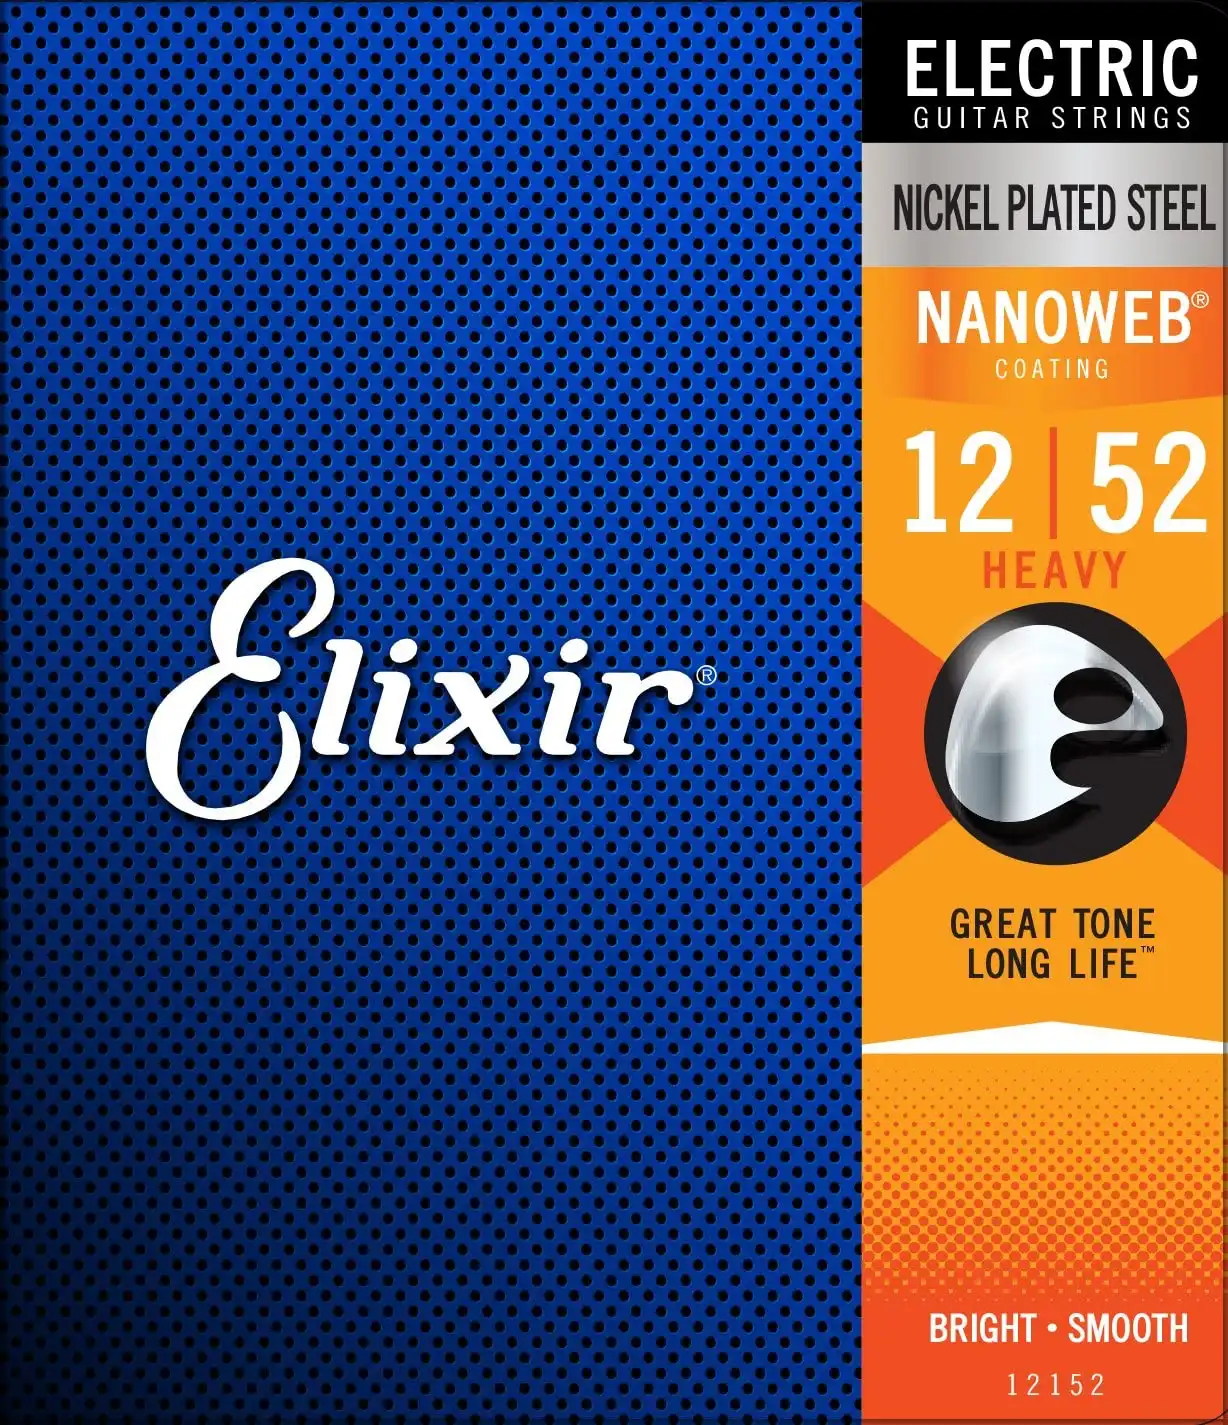 Elixir Electric Guitar Strings NANOWEB Coating Heavy (.012-.052)